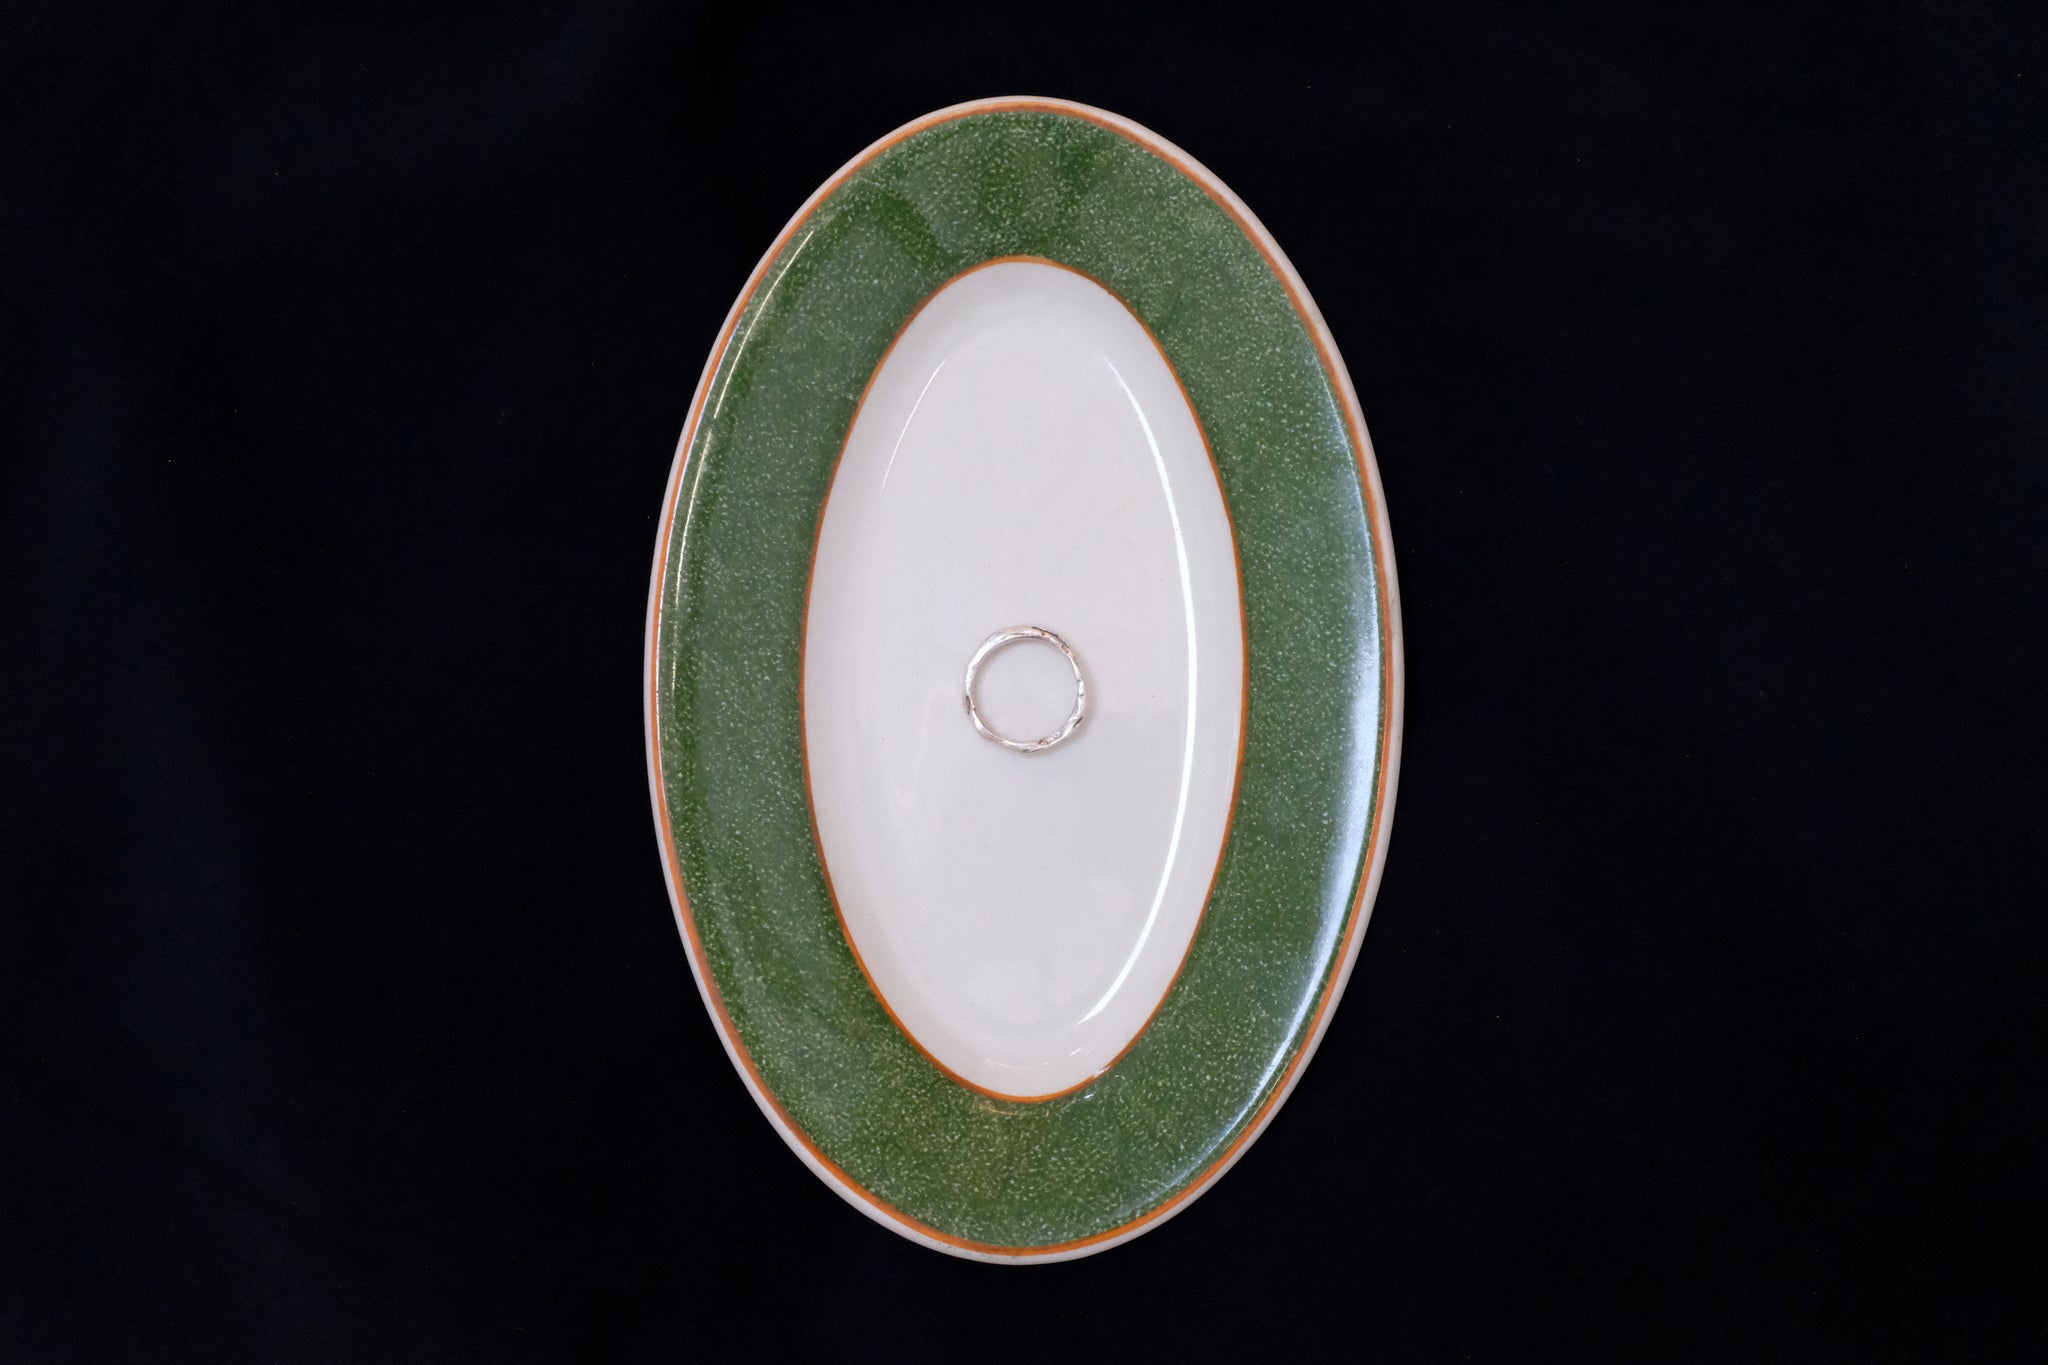 Royal Vintage Ring Single Dish with Green Rim